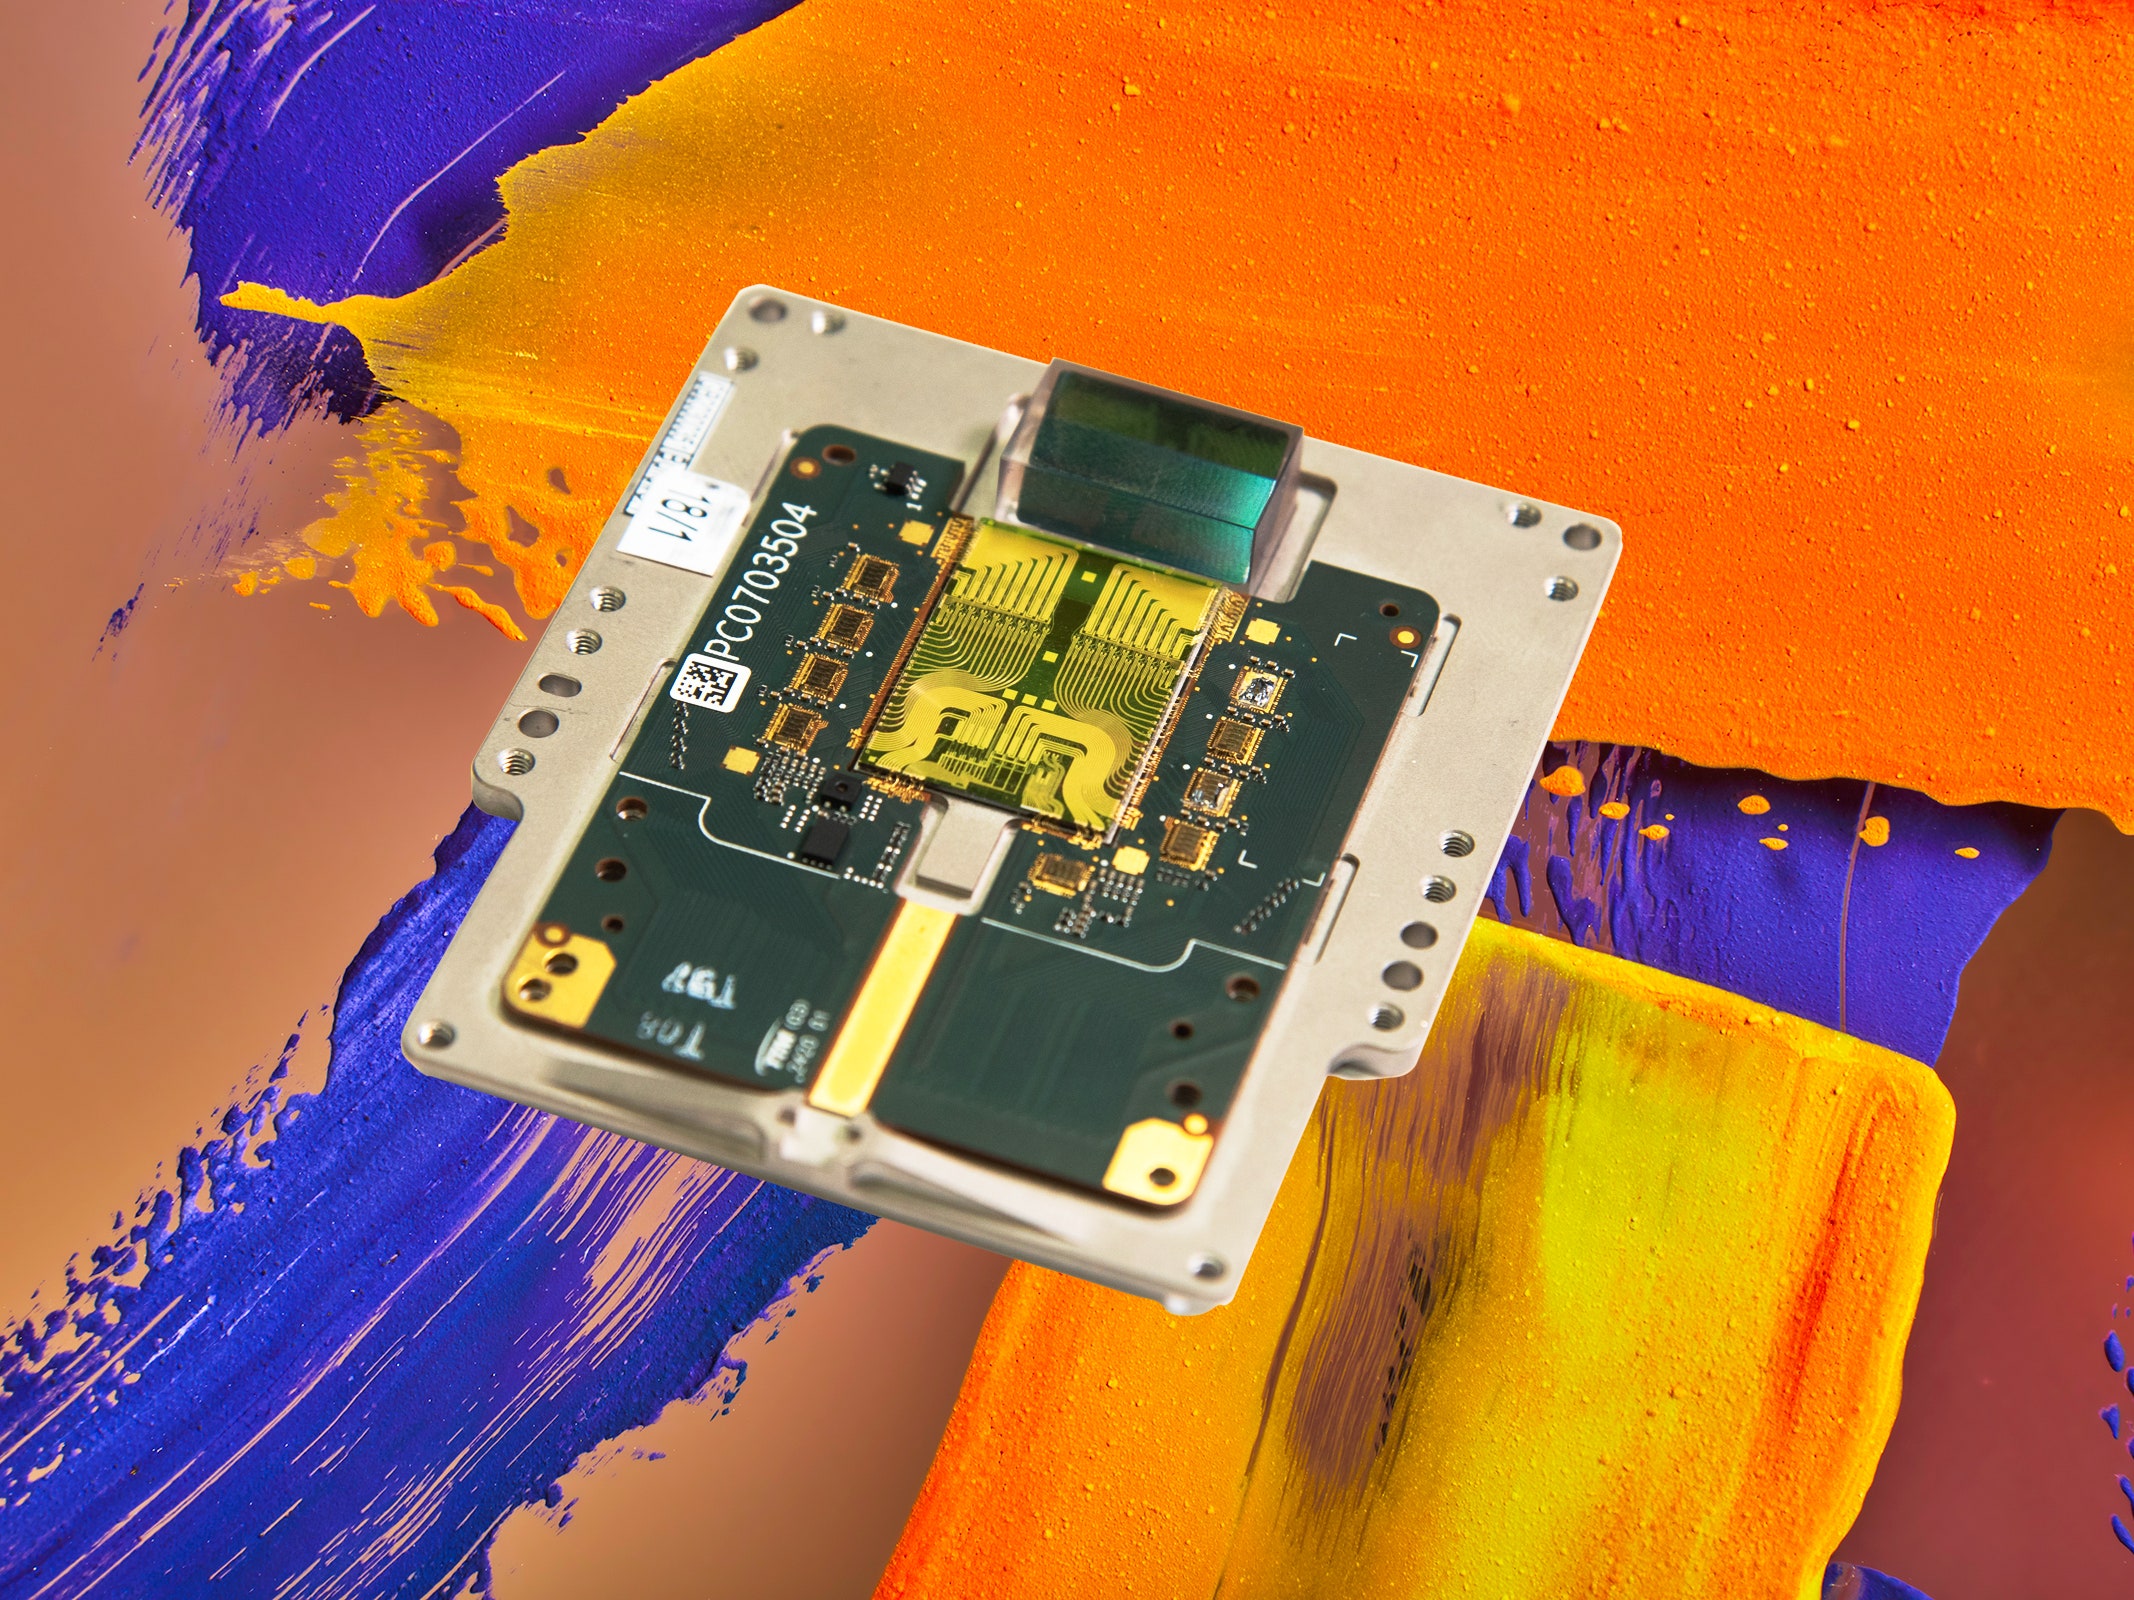 Gear-CES-Mobileye-Intel-Chip.jpg